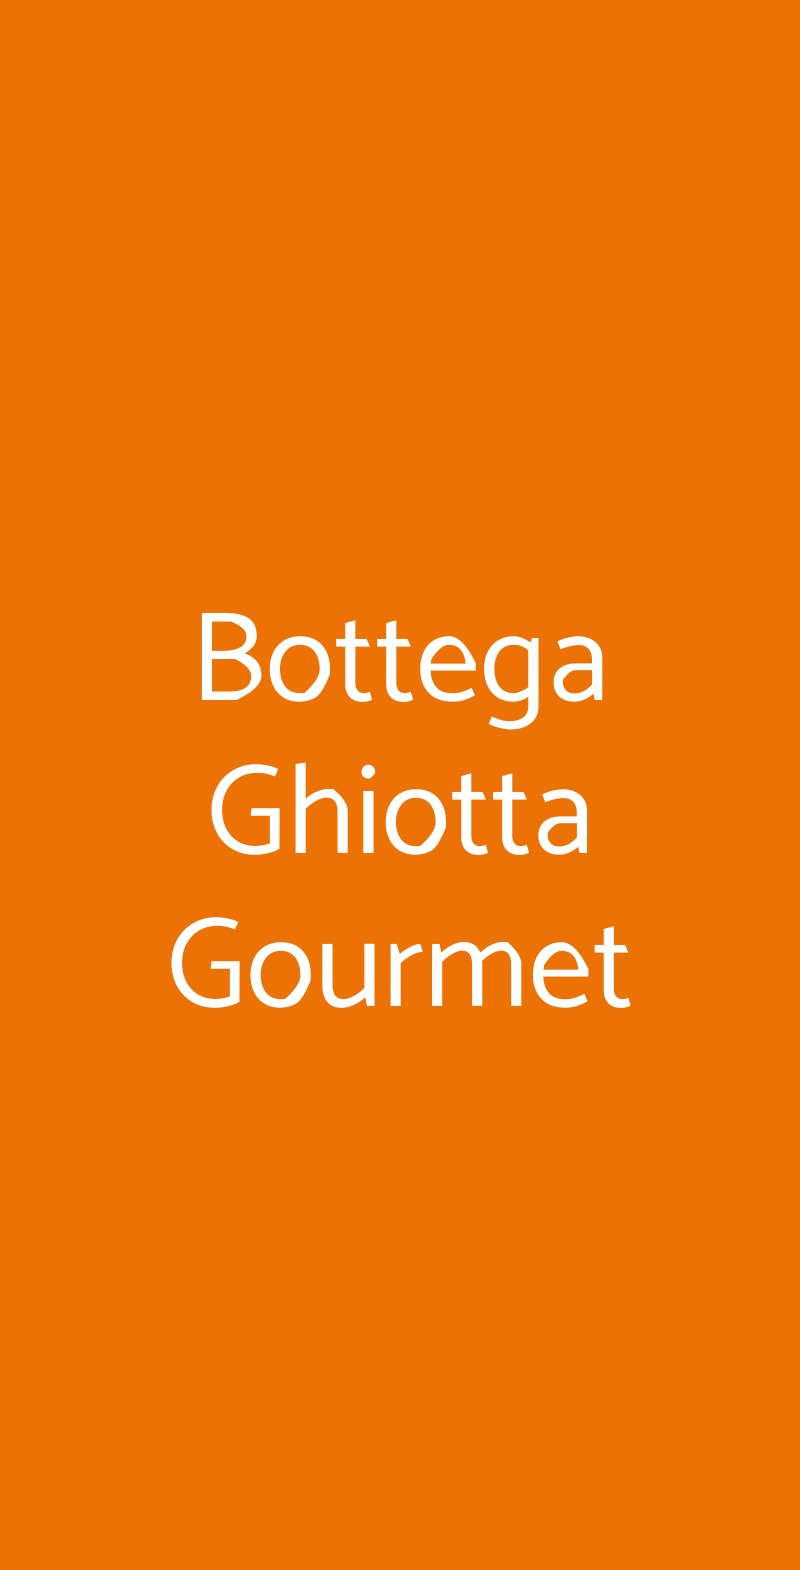 Bottega Ghiotta Gourmet Milano menù 1 pagina